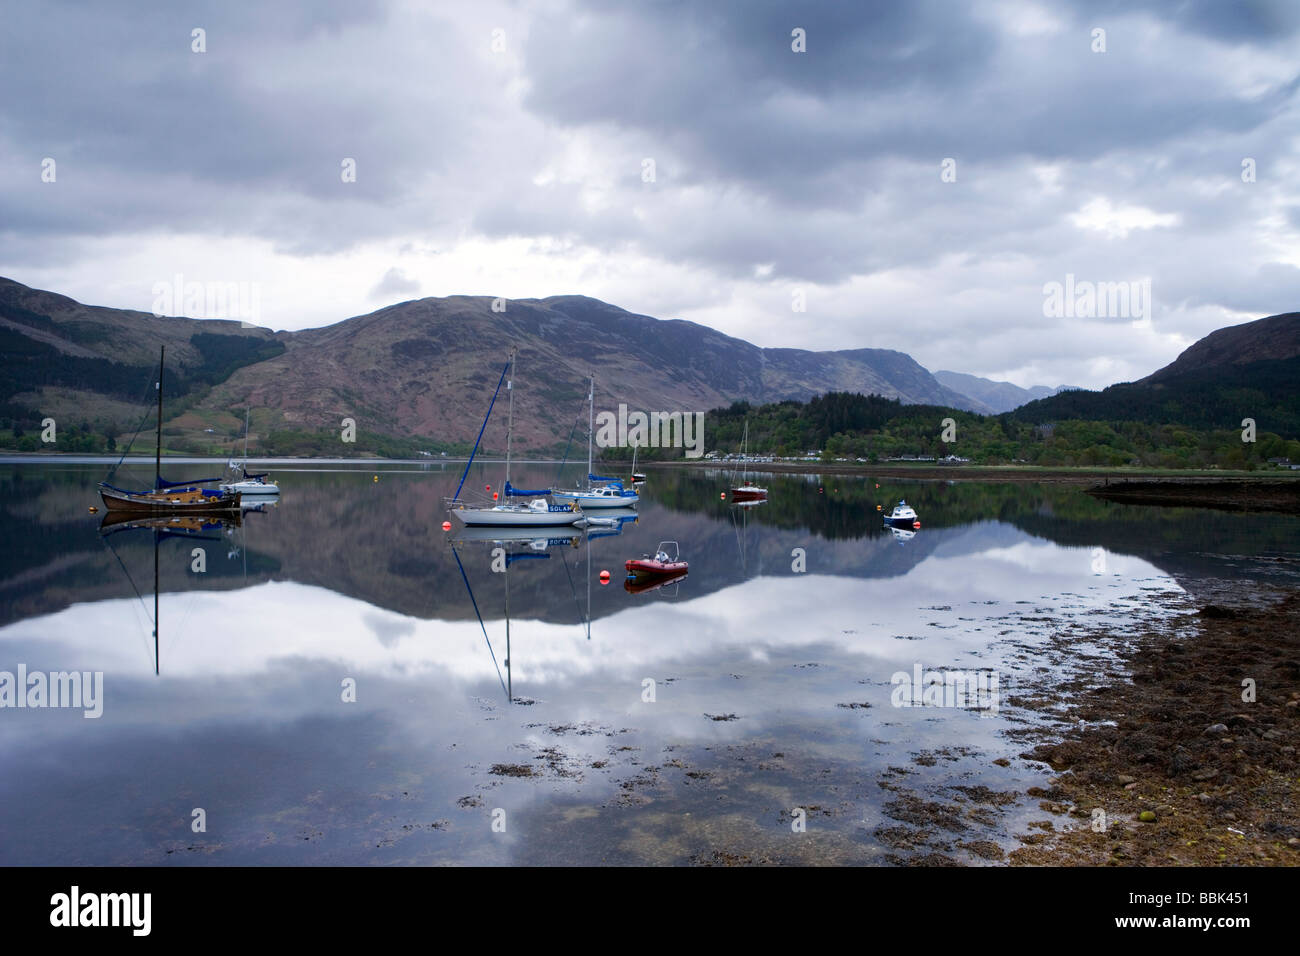 Sailboats Reflecting in Loch Leven, Glencoe, Ballachulish, Scotland. Stock Photo